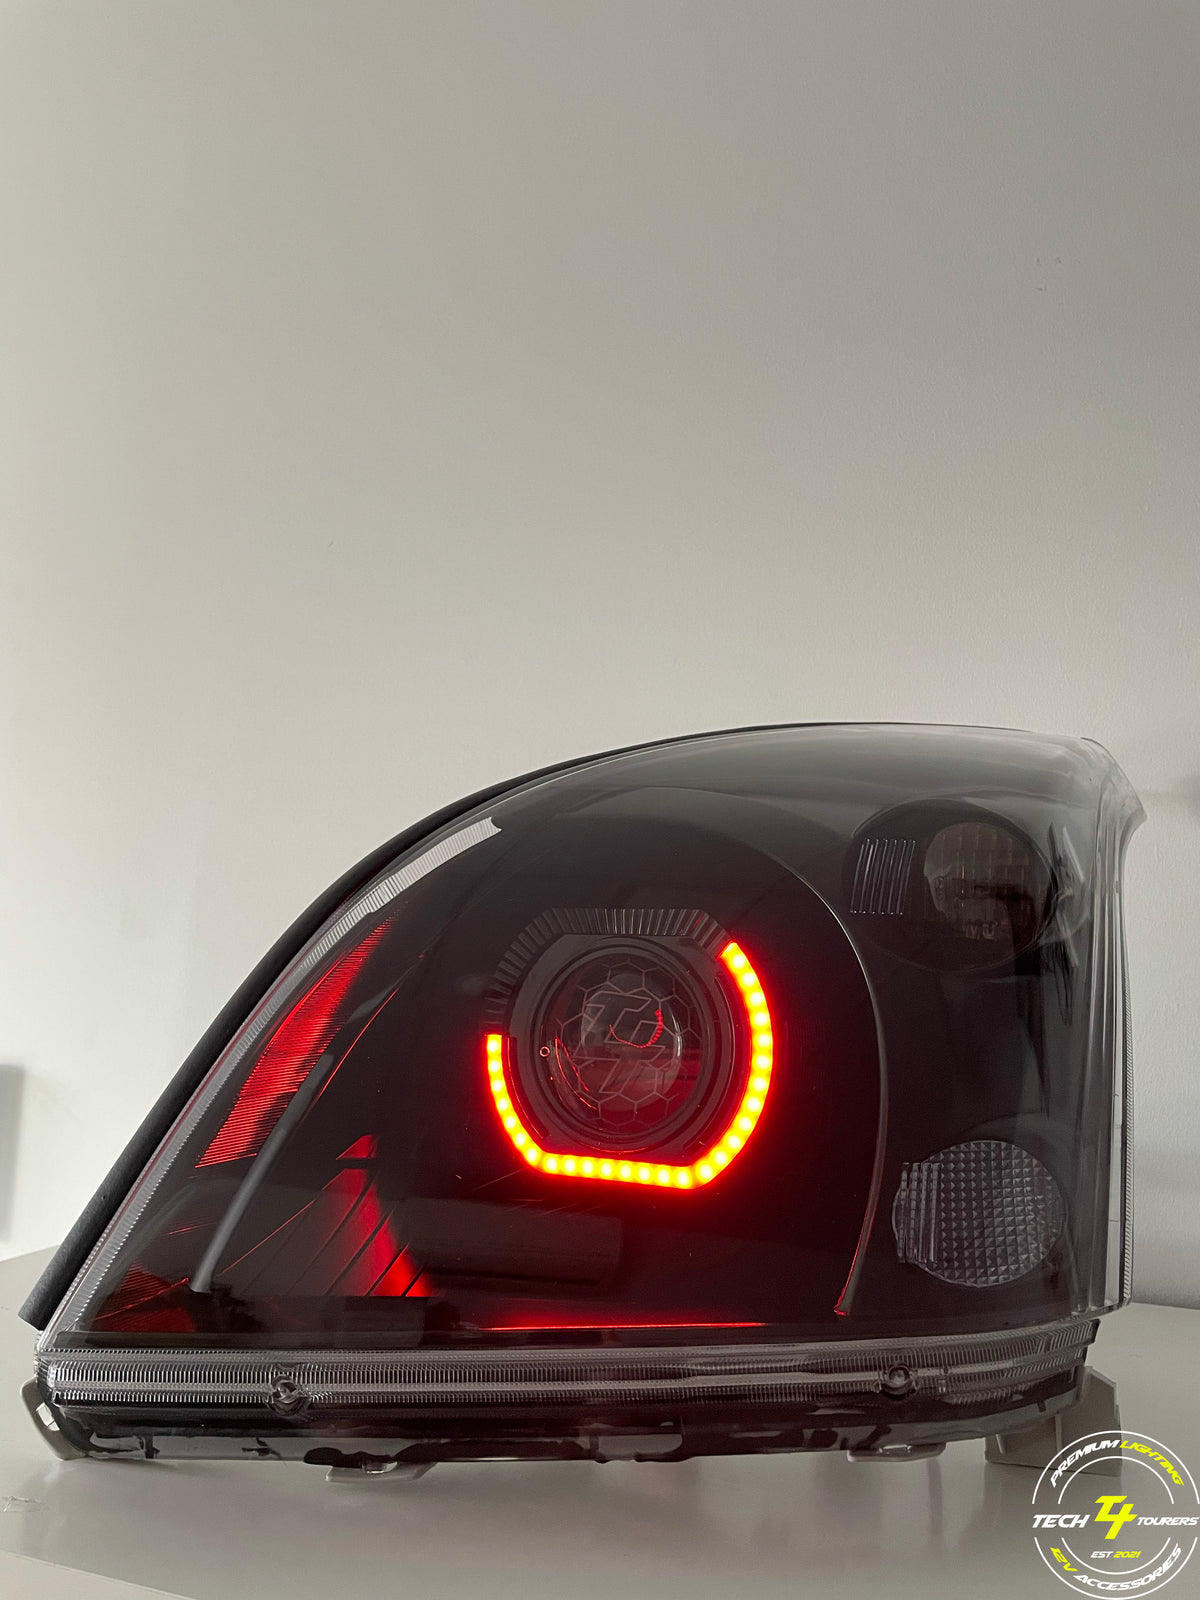 Toyota Prado 120 series Premium Projector headlights